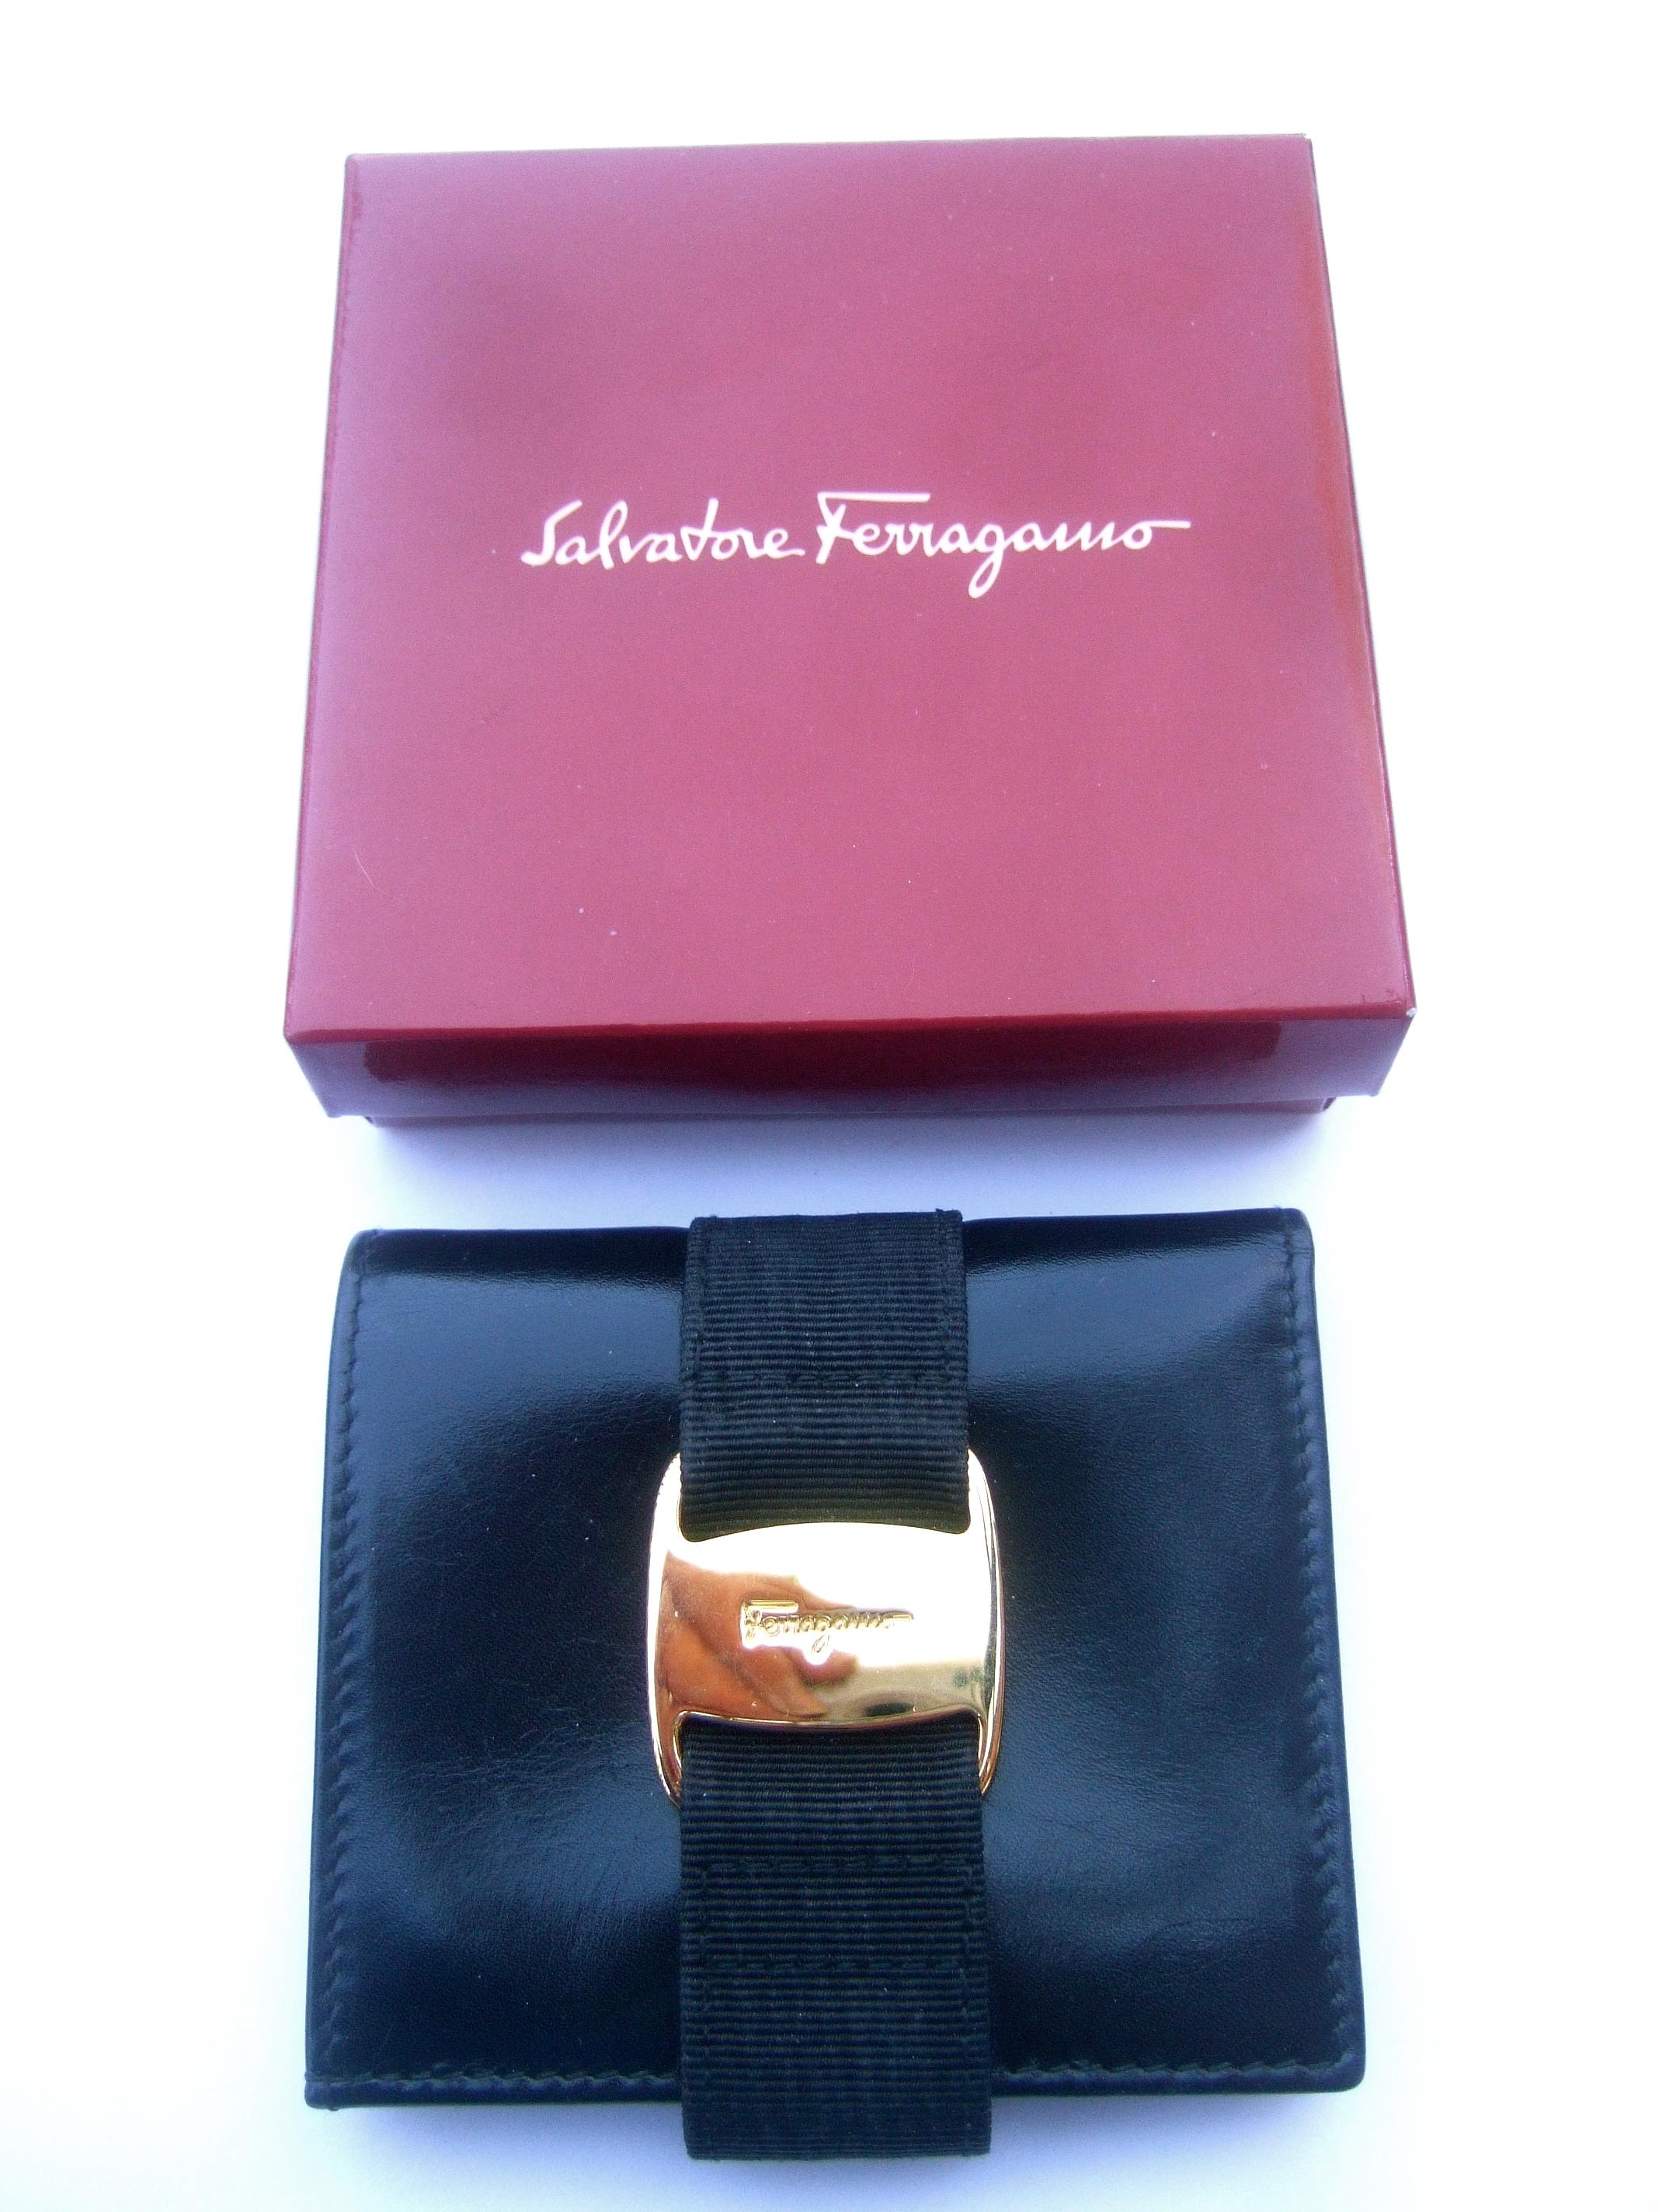 Salvatore Ferragamo Italy Black Leather Ribbon Trim Wallet in Box c 1990s 2